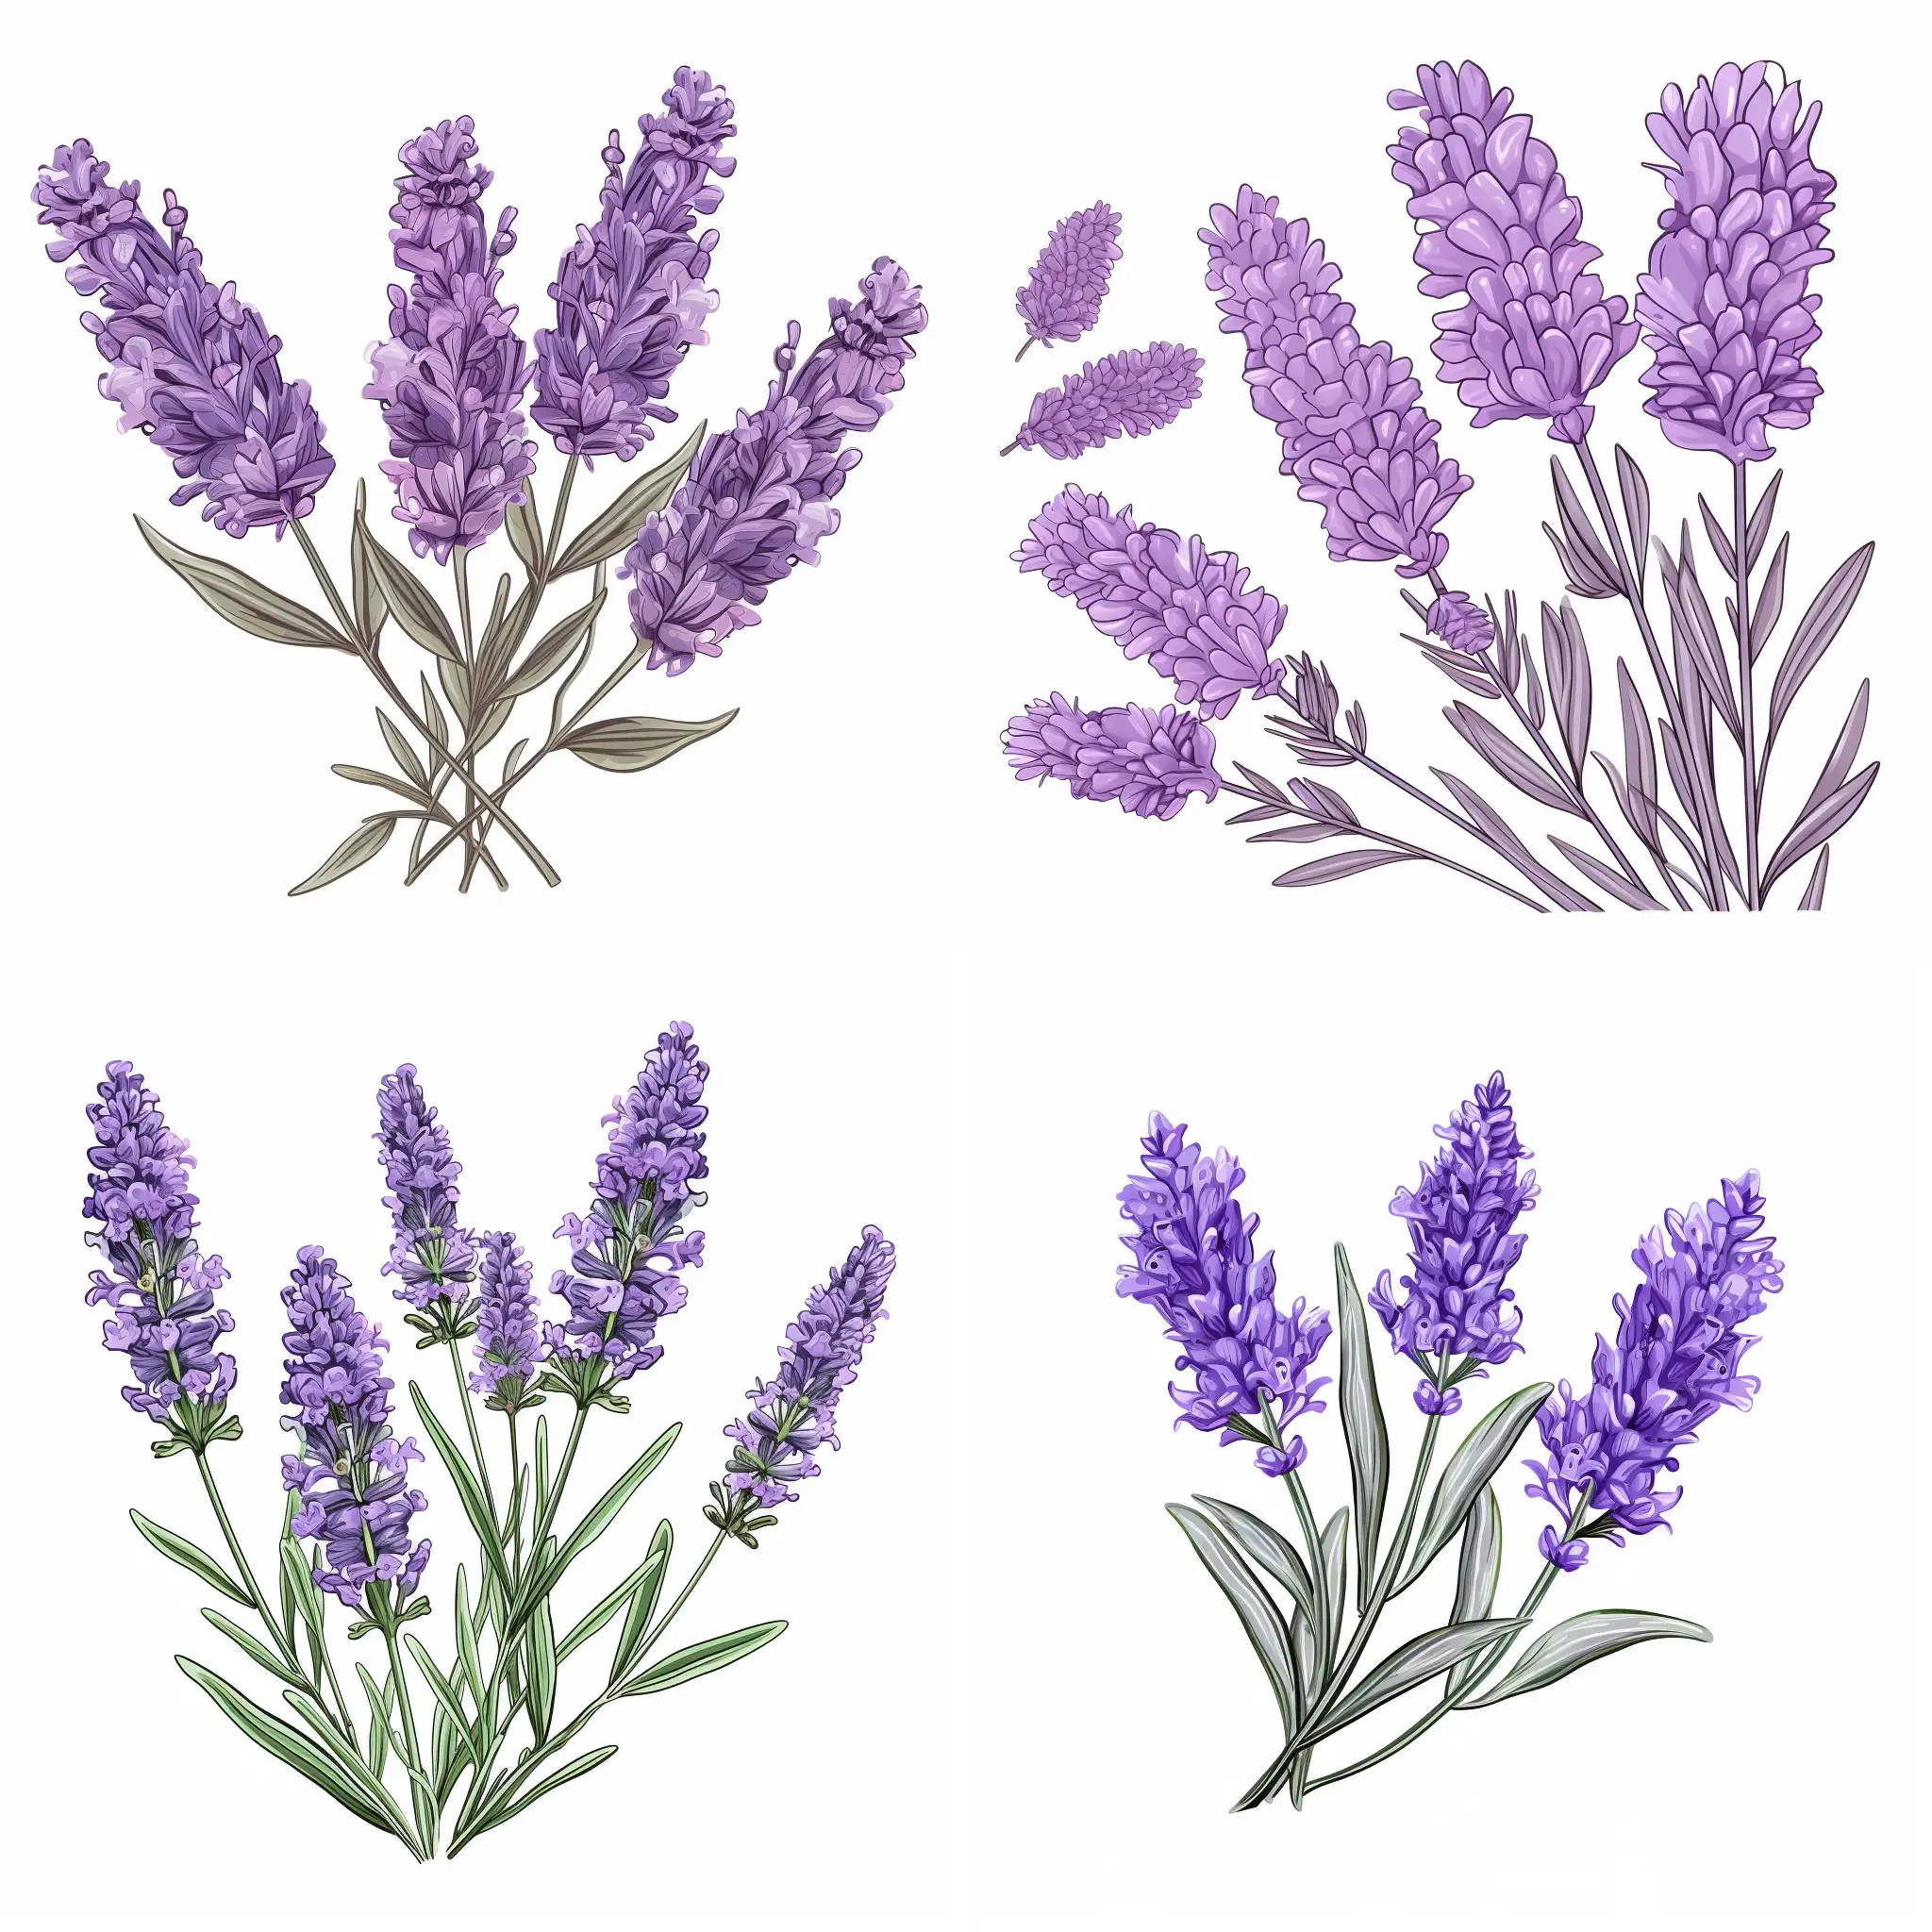 Lavender clip art illustration isolated on white background